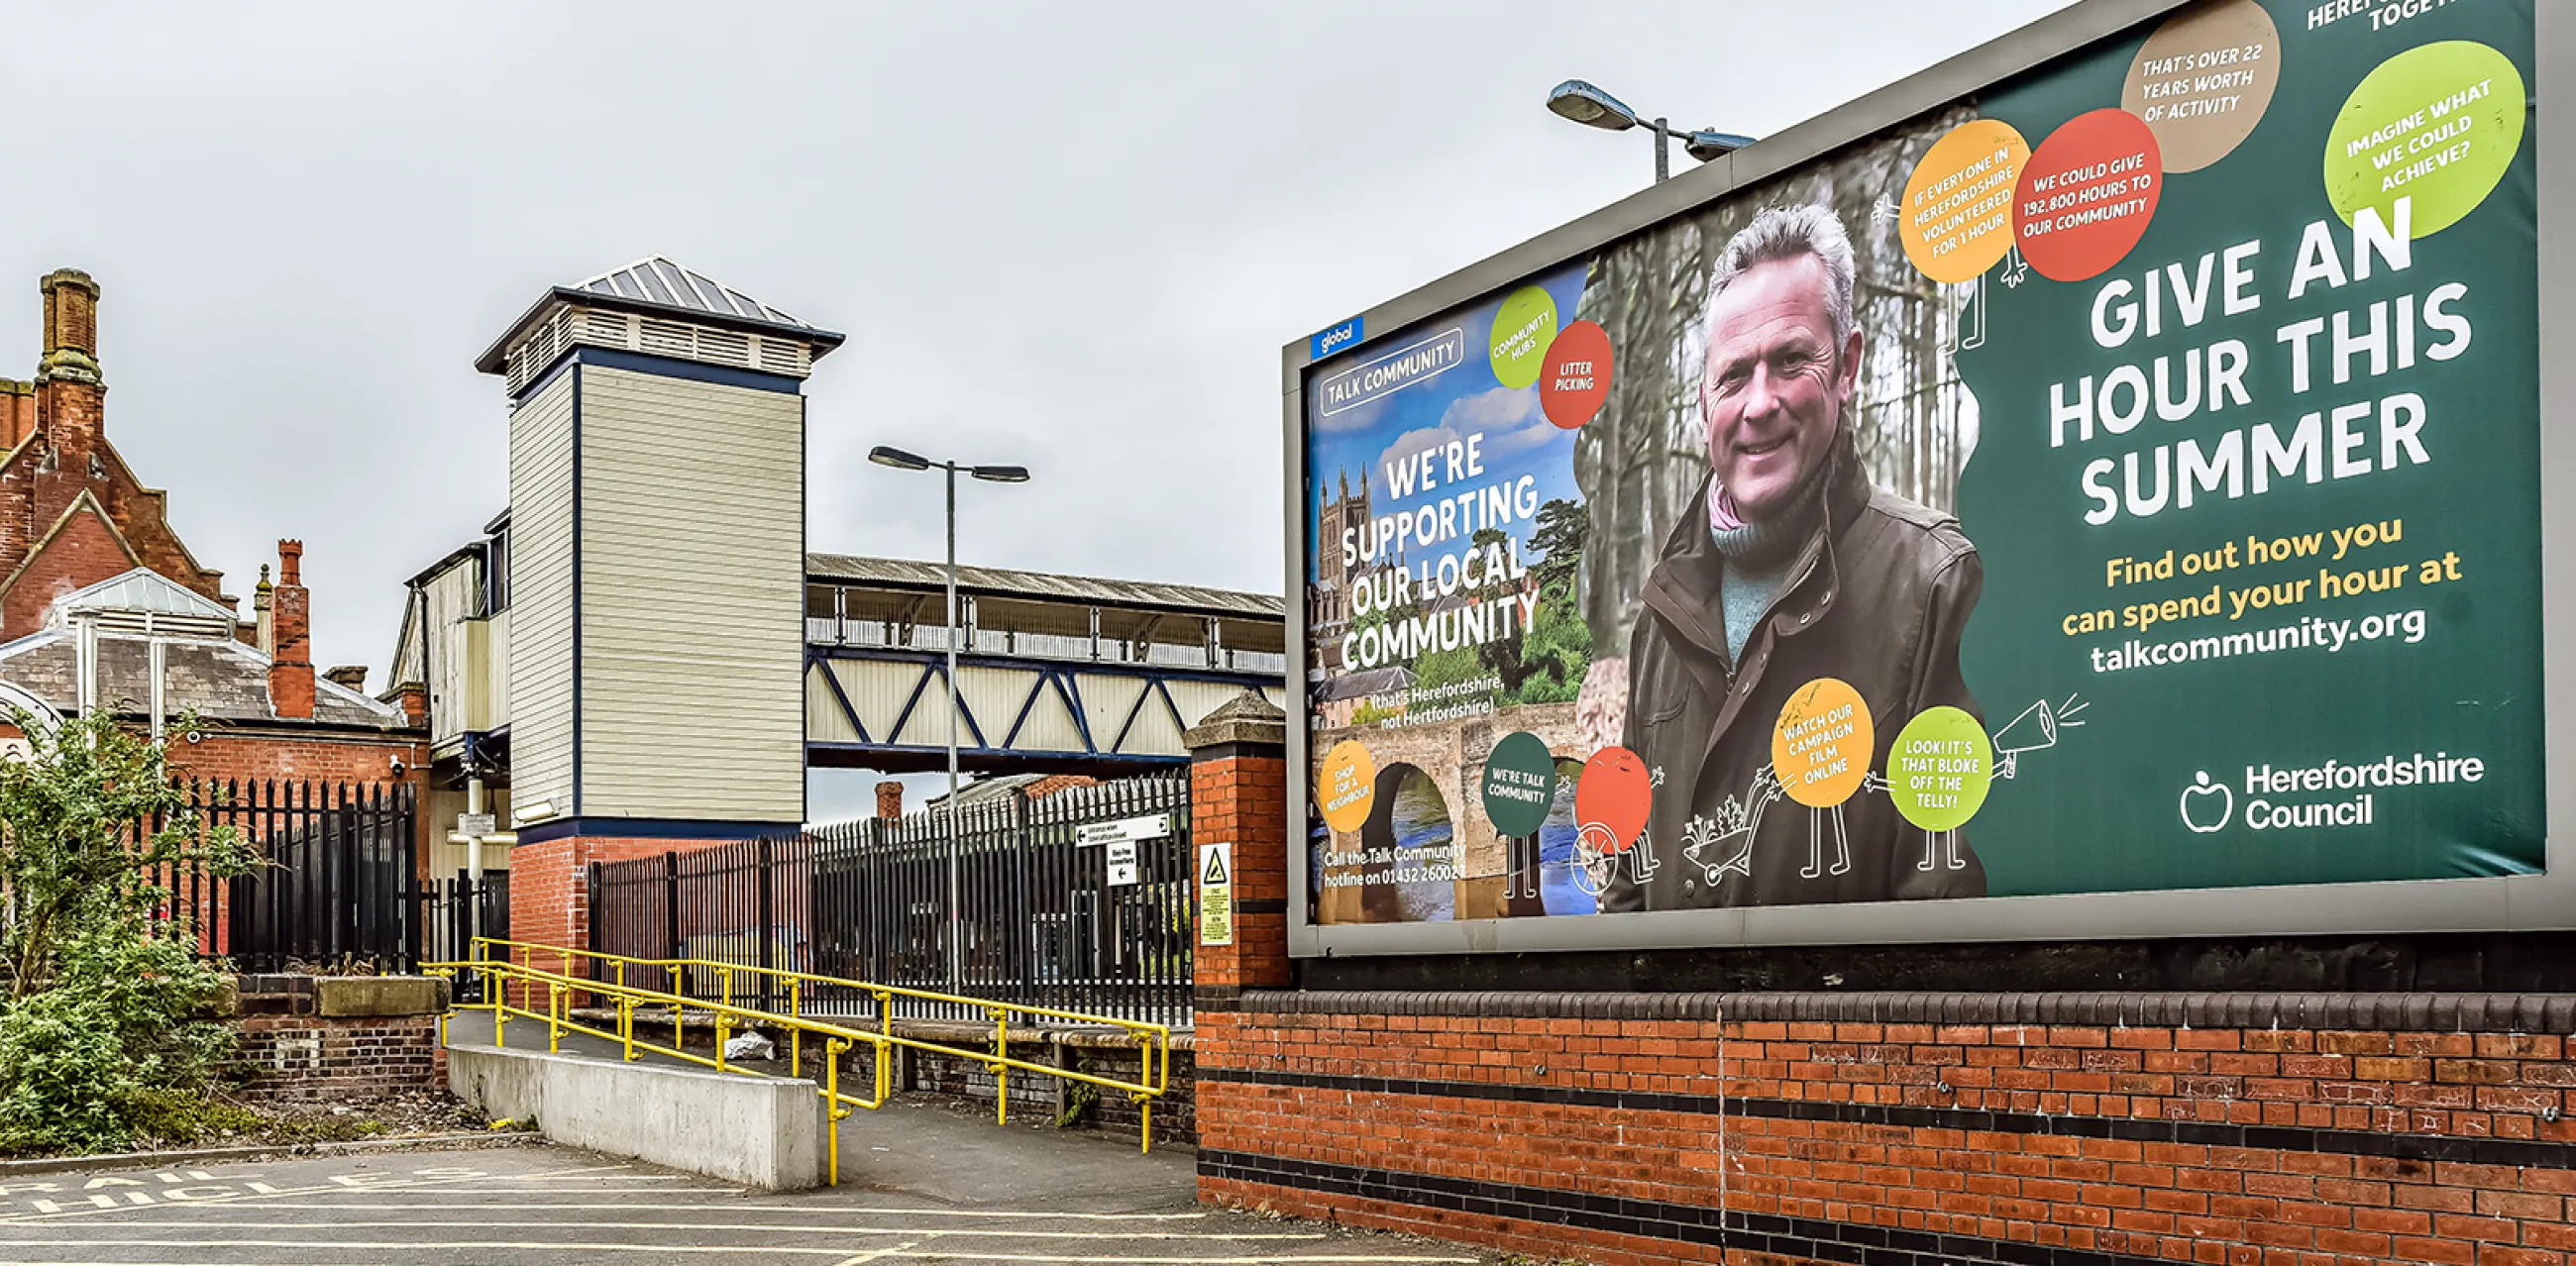 Photo of a Talk Community billboard outside Hereford railway station